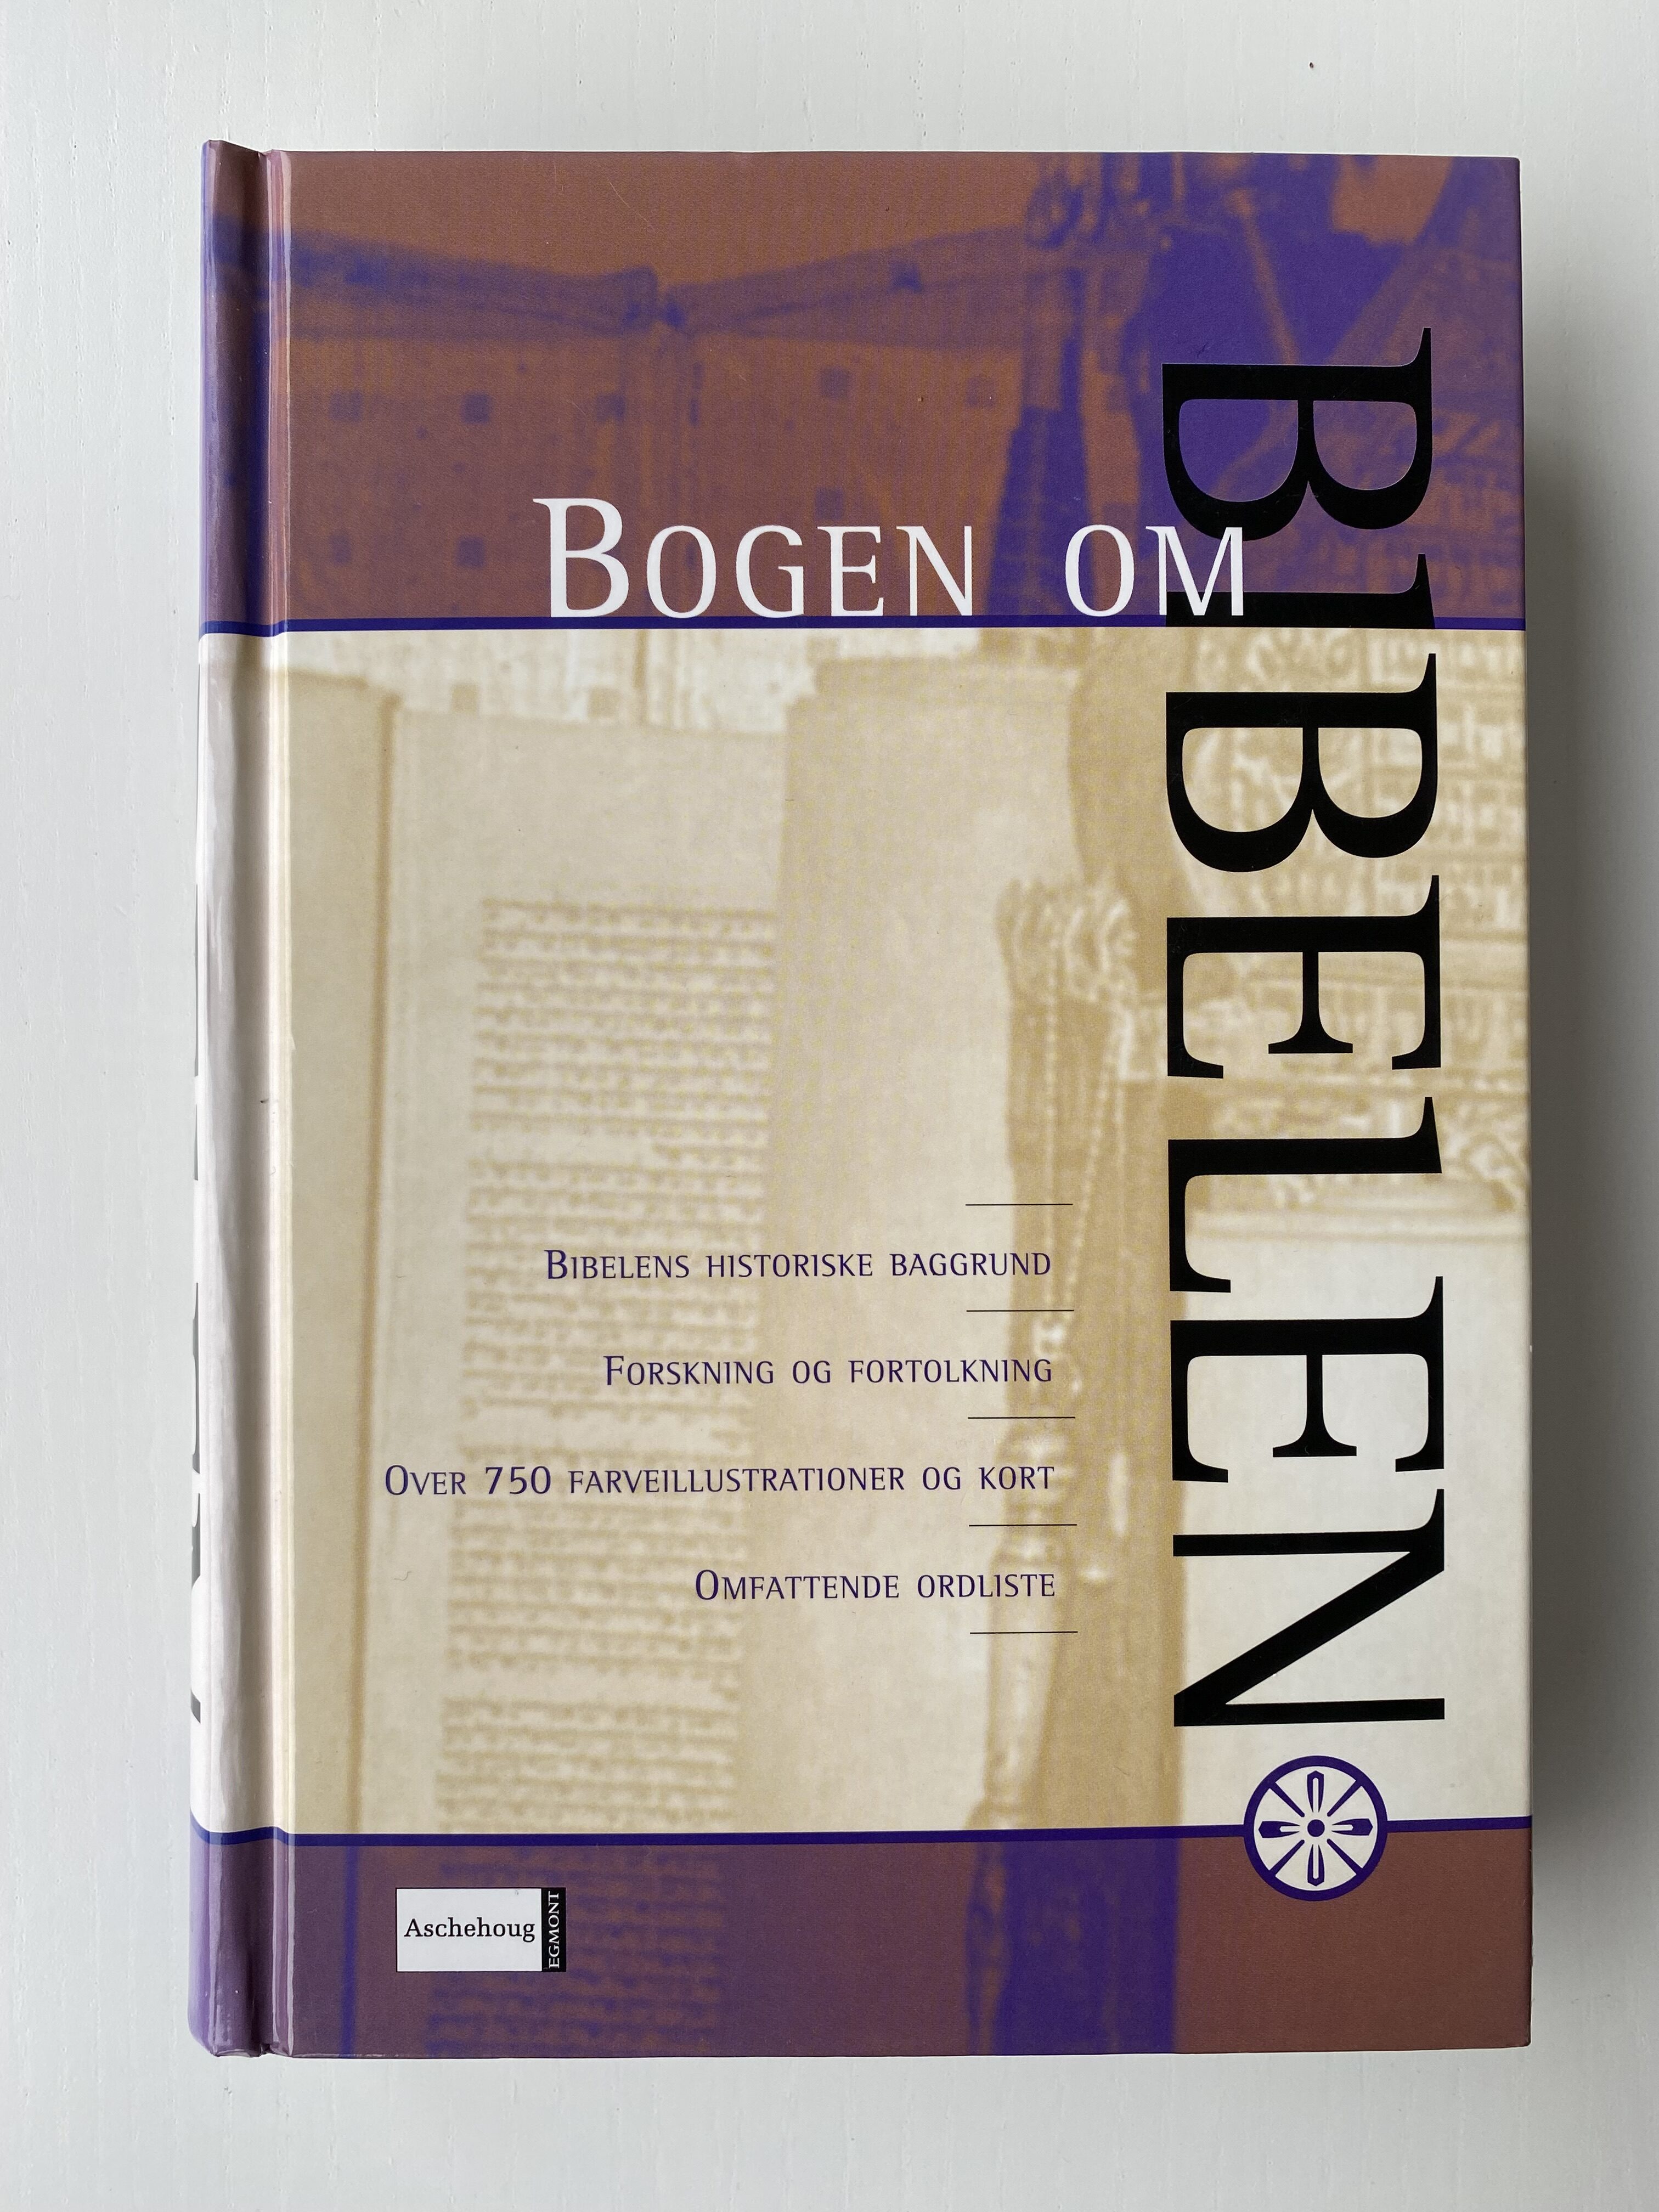 Køb "Bogen om Bibelen 2005" (forside)